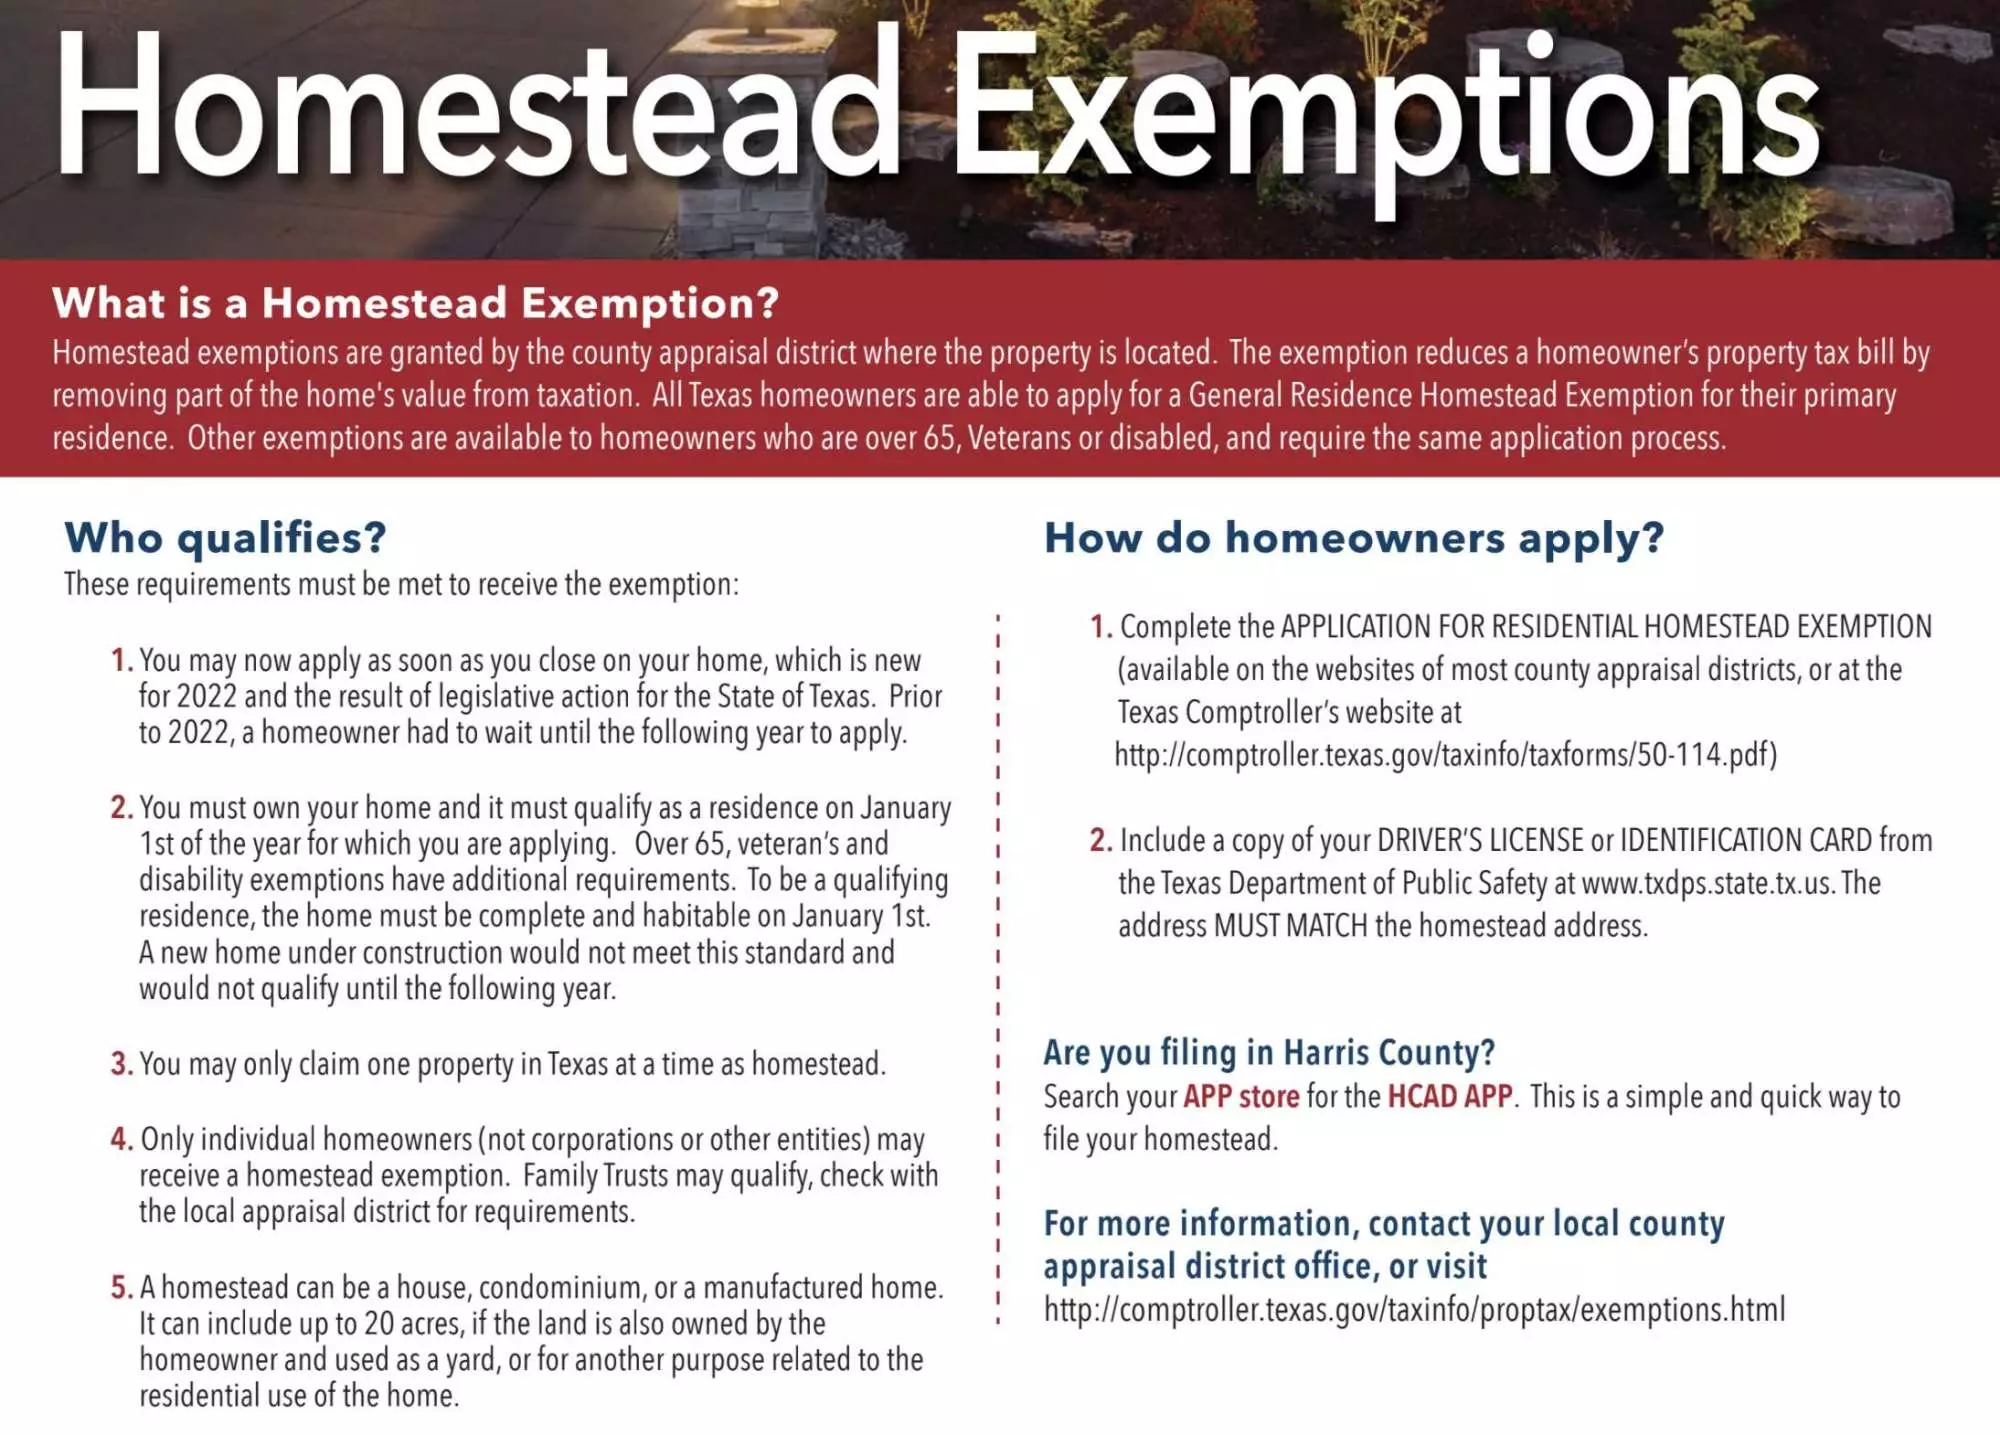 2022 Texas Homestead Exemption Law Update